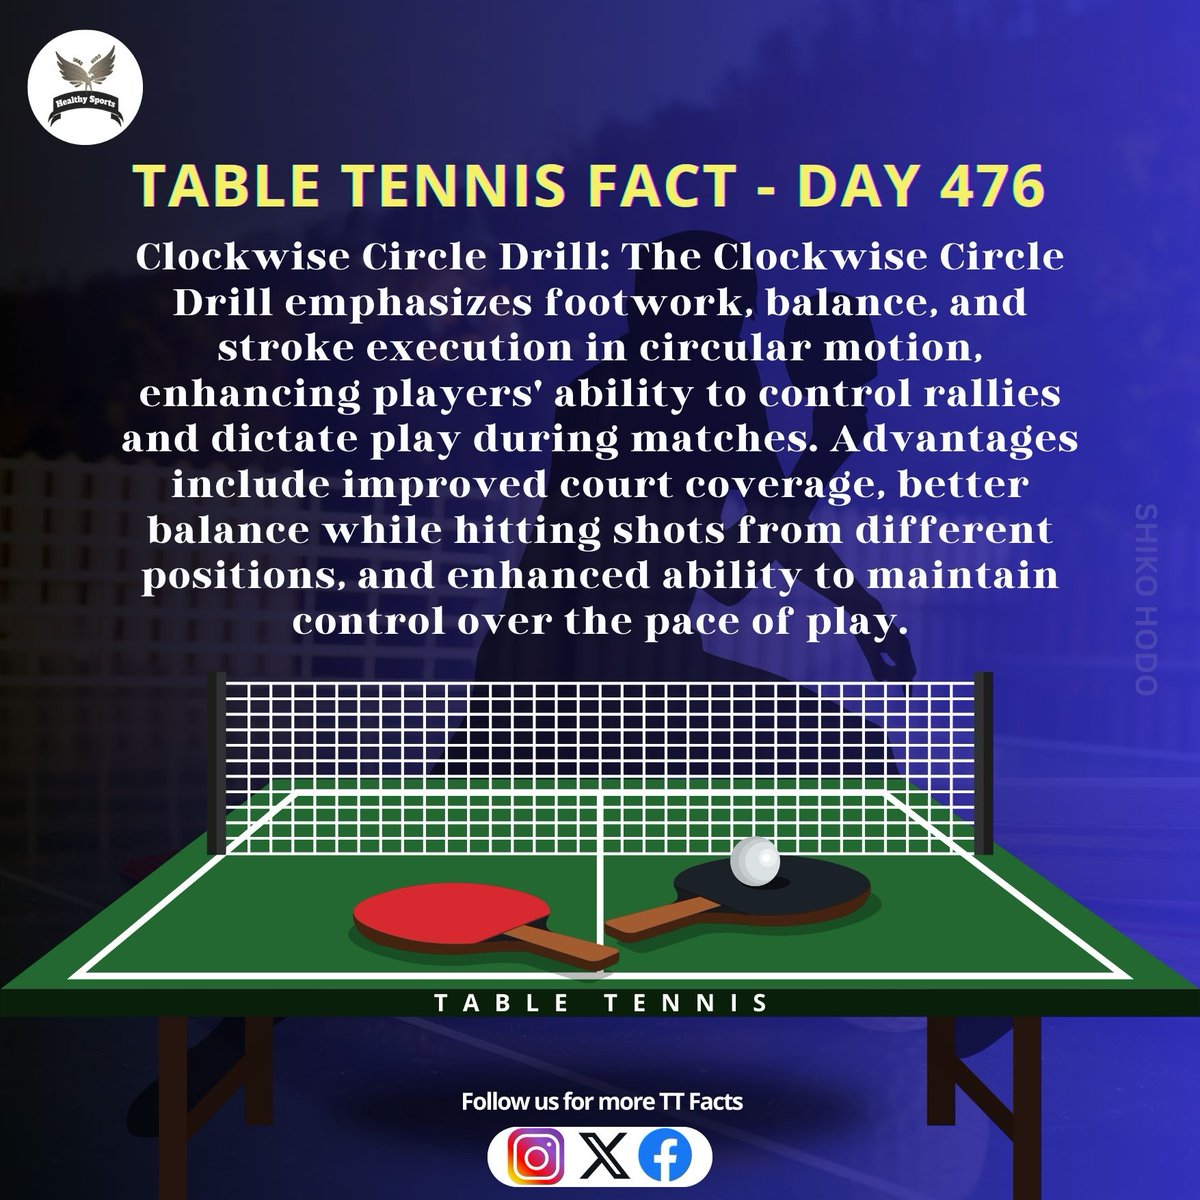 Table Tennis Fact - Day 476
. 
. 
. 
#tabletennis #pingpong #TTfacts #sport #ittf #Gozzimma #KnowmorefactsaboutTT #tipsandtricks #ttplayers #Tabletennissmash #smashandkill